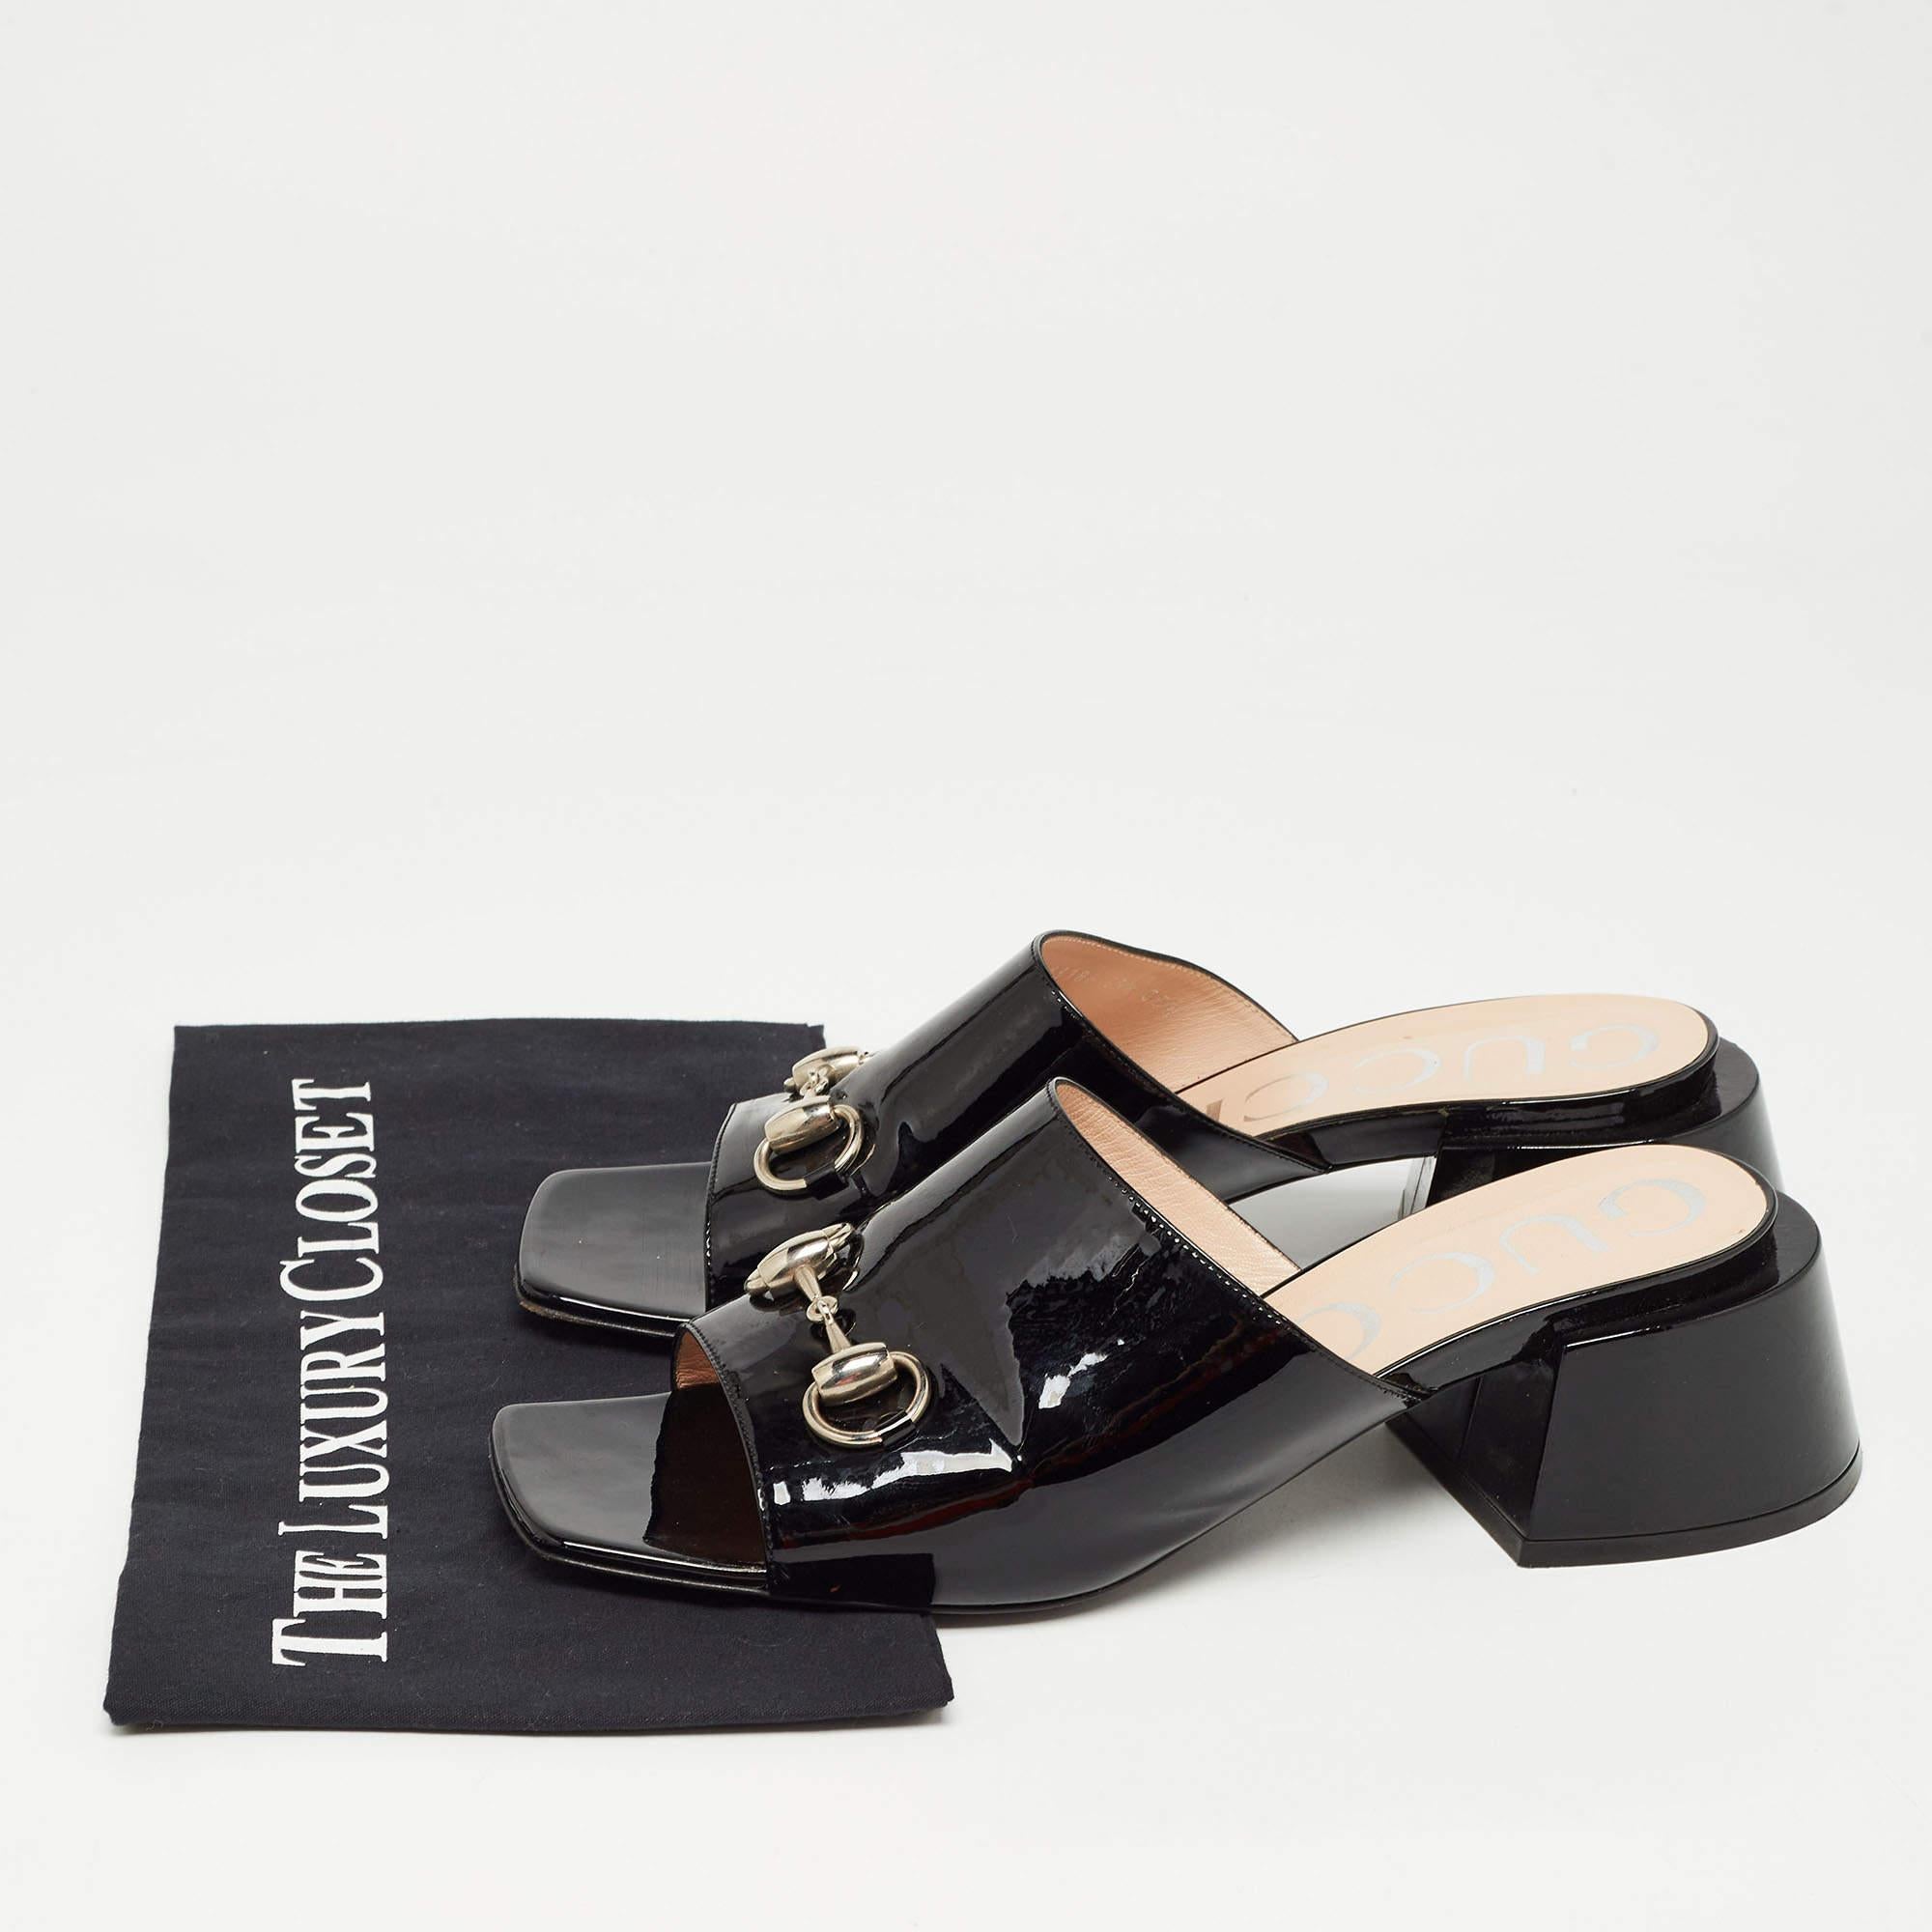 Gucci Black Patent Leather Horsebit Block Heel Slide Sandals Size 39.5 5